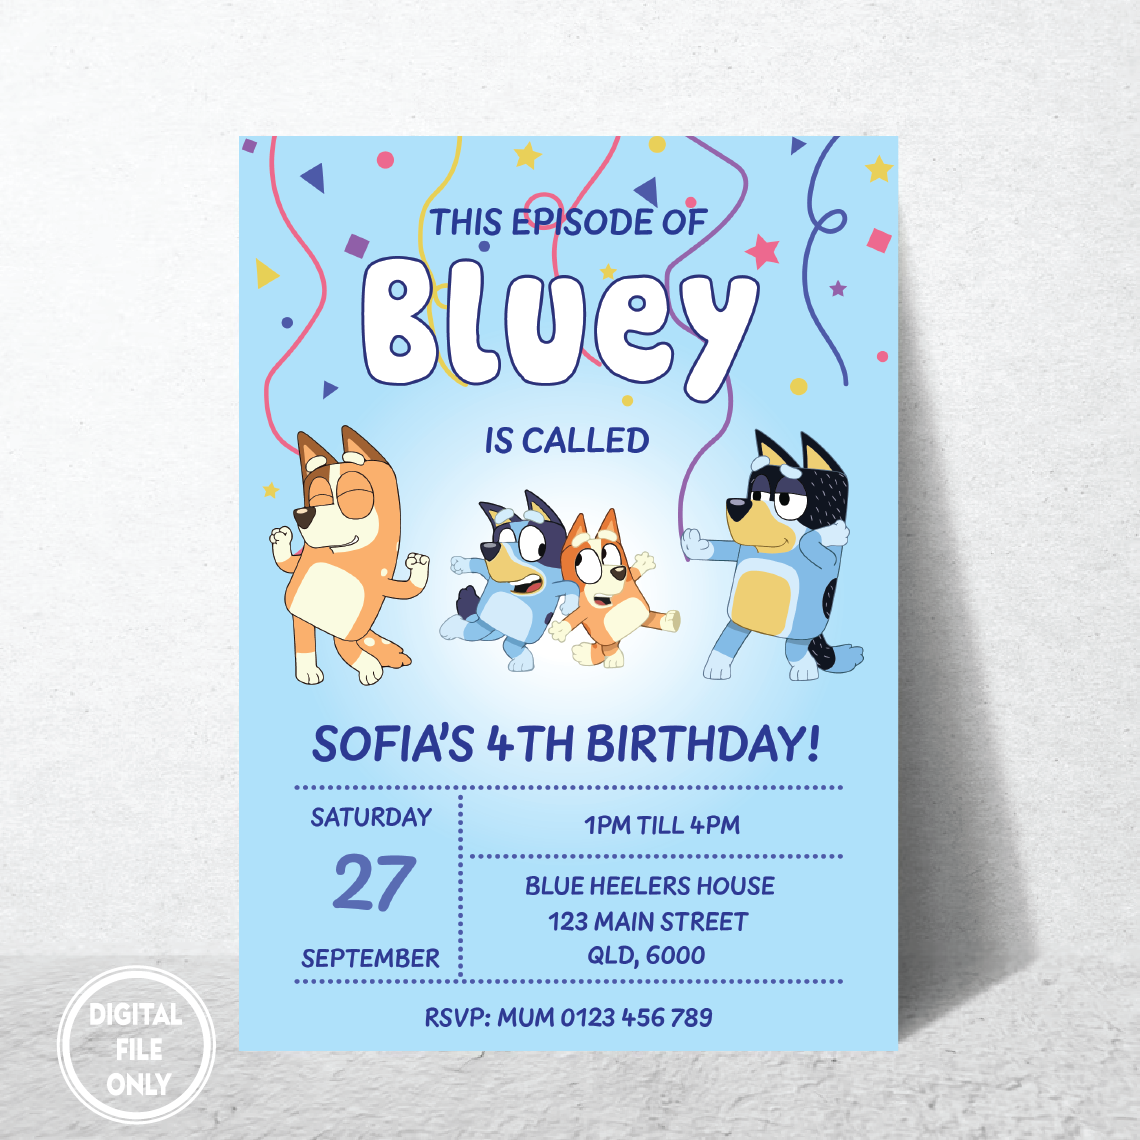 Personalized File Bluey Invitation, Digital Invite, Editable-Printable, Bluey Boys and Girls invite, Bluey birthday invitation PNG File Only